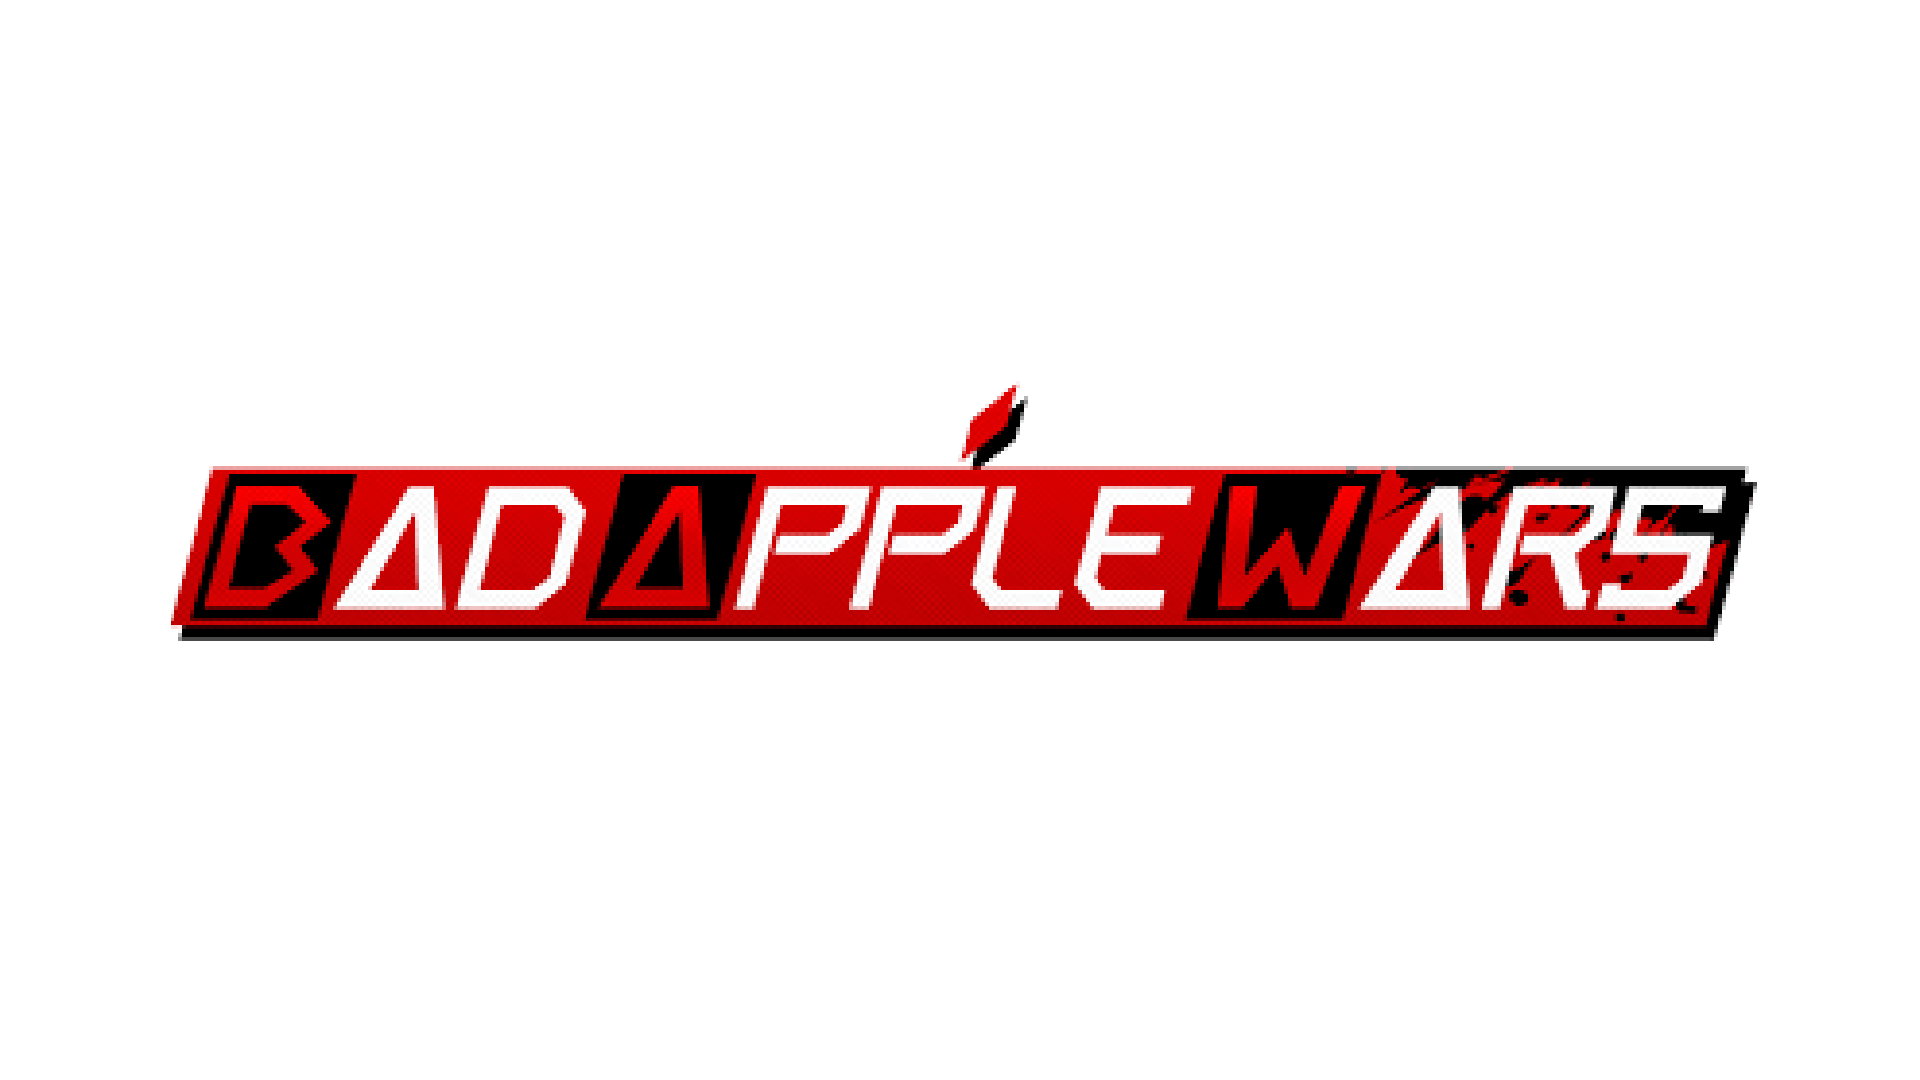 Bad Apple Wars Logo